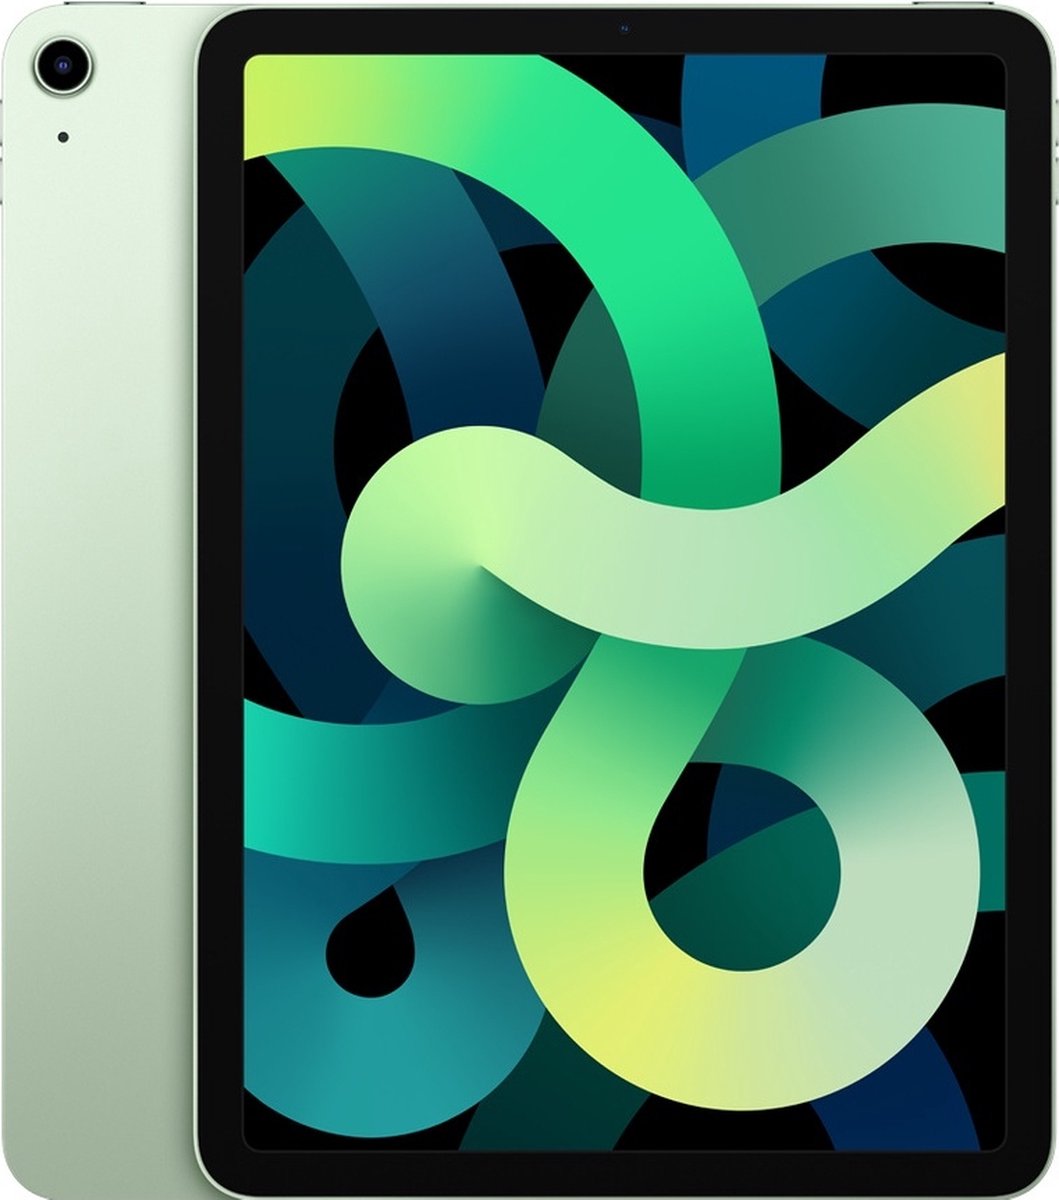 Bol.com Apple iPad Air (2020) - 10.9 inch - WiFi - 64GB - Groen aanbieding